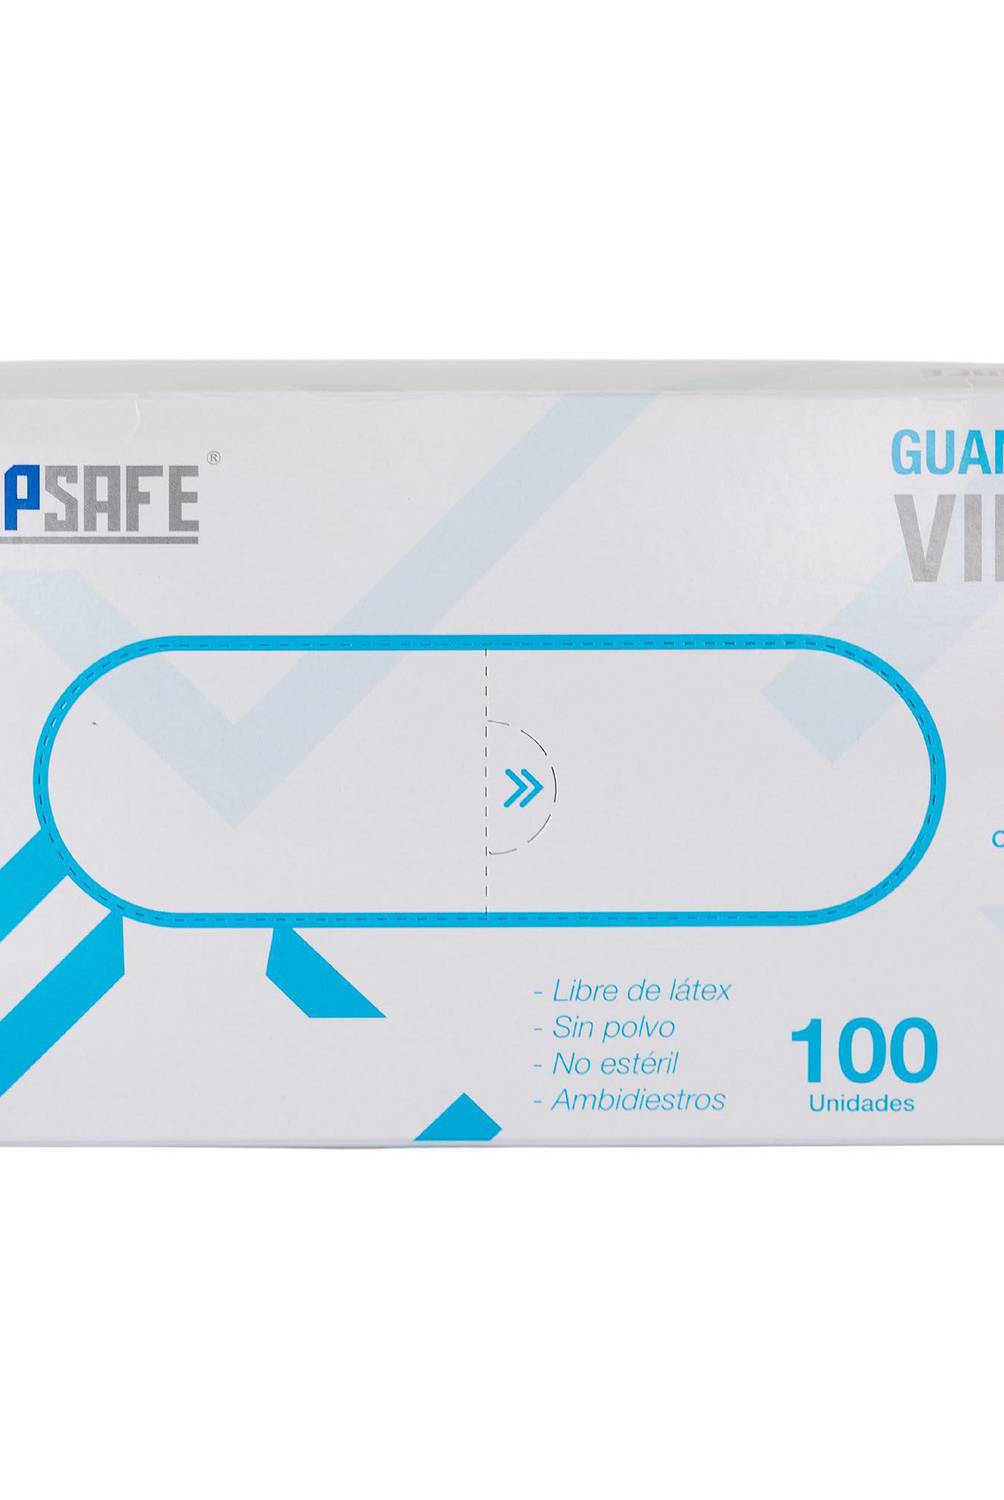 TOPSAFE - Guantes desechables de vinilo talla L caja x 100 unidades